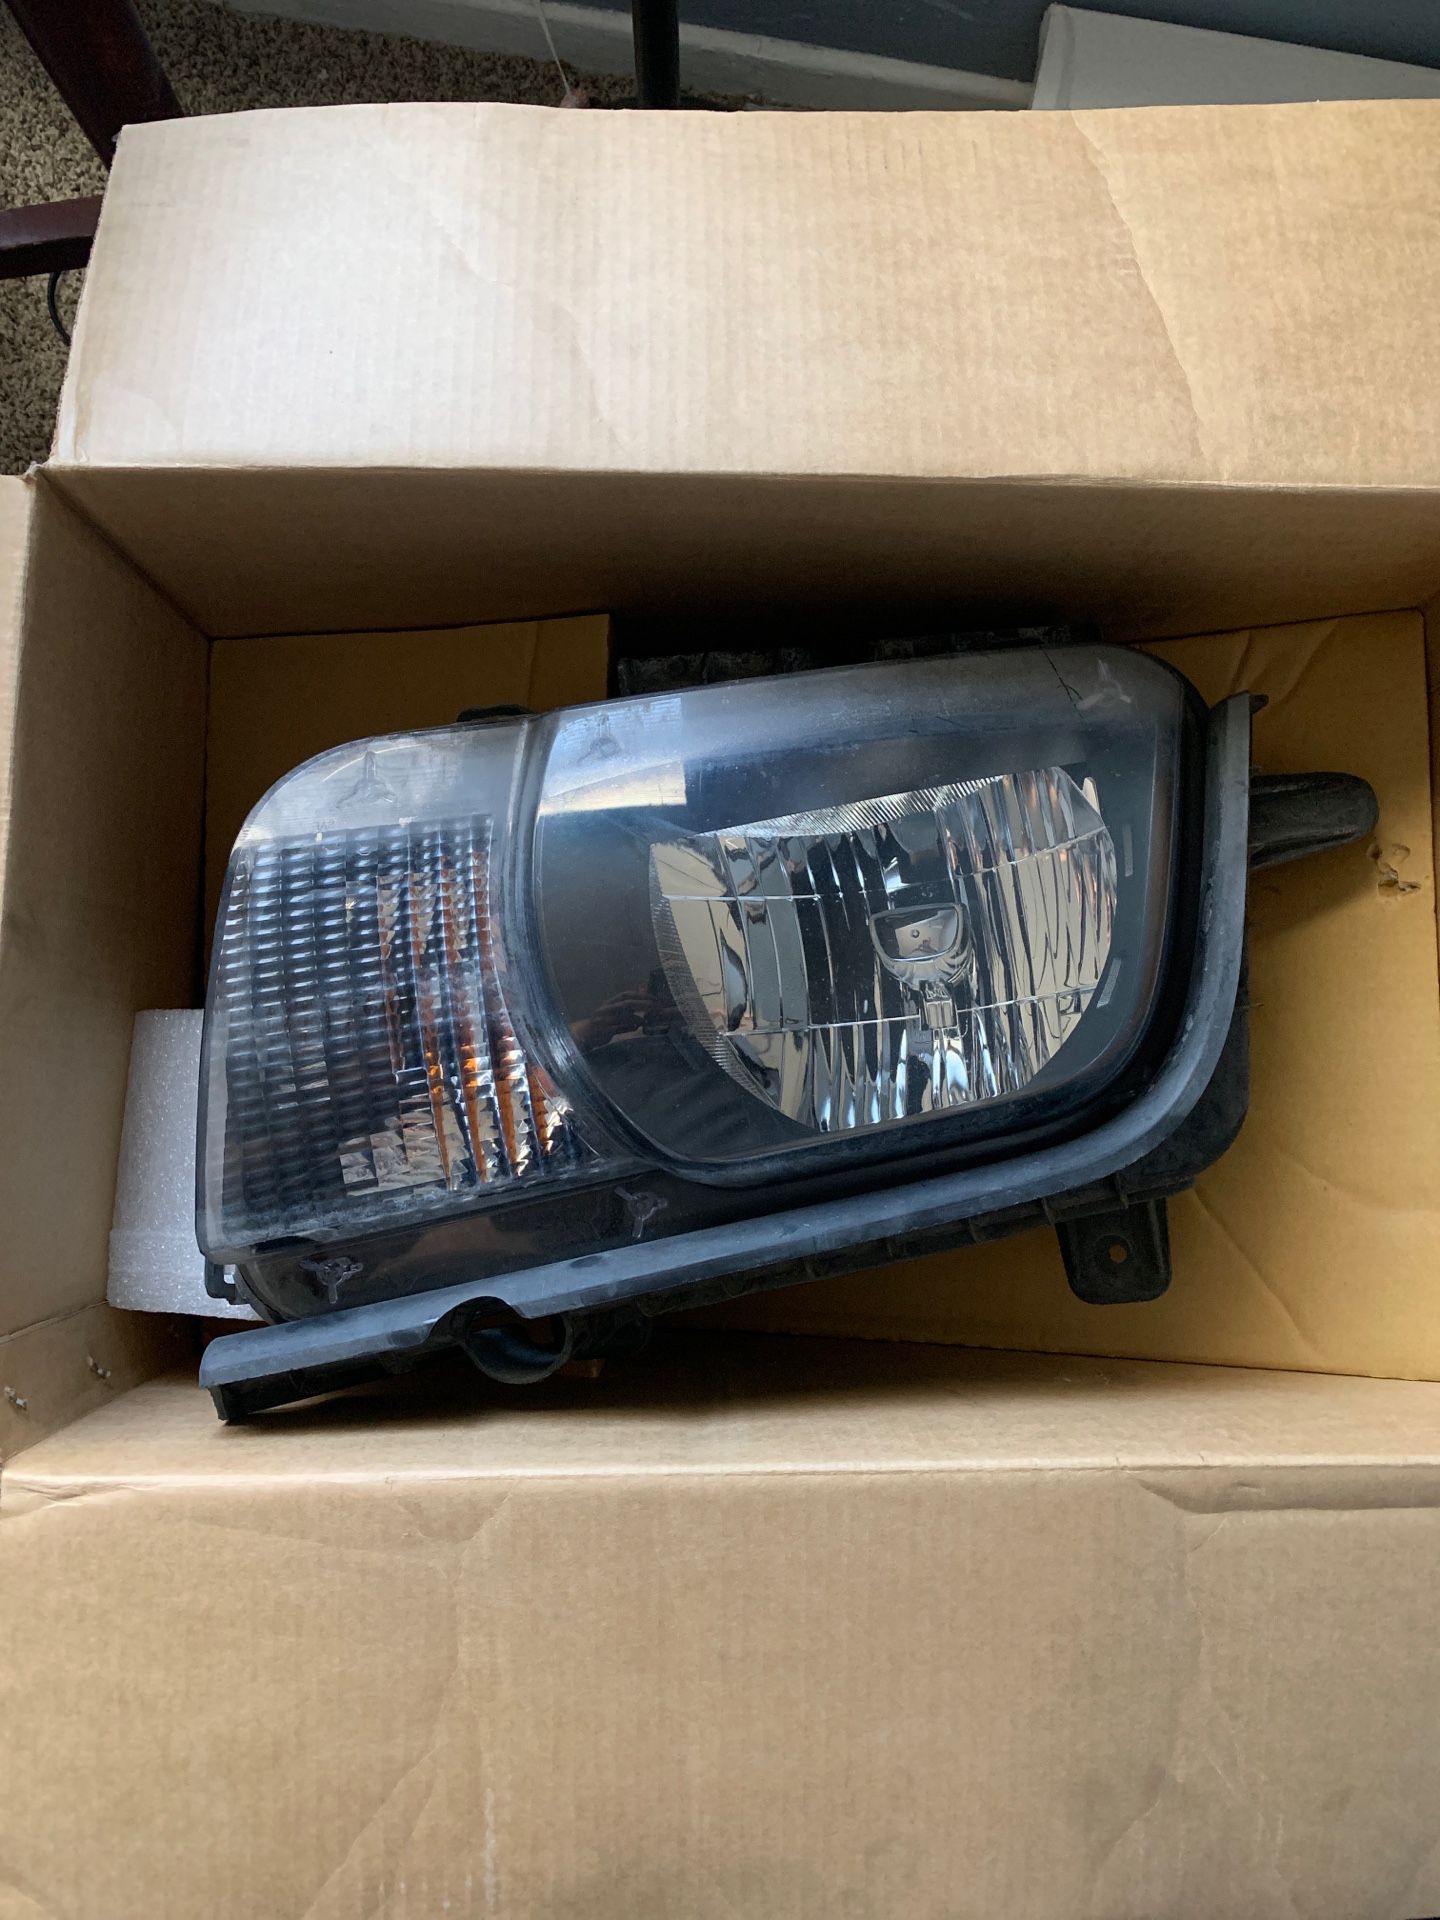 Camaro headlight